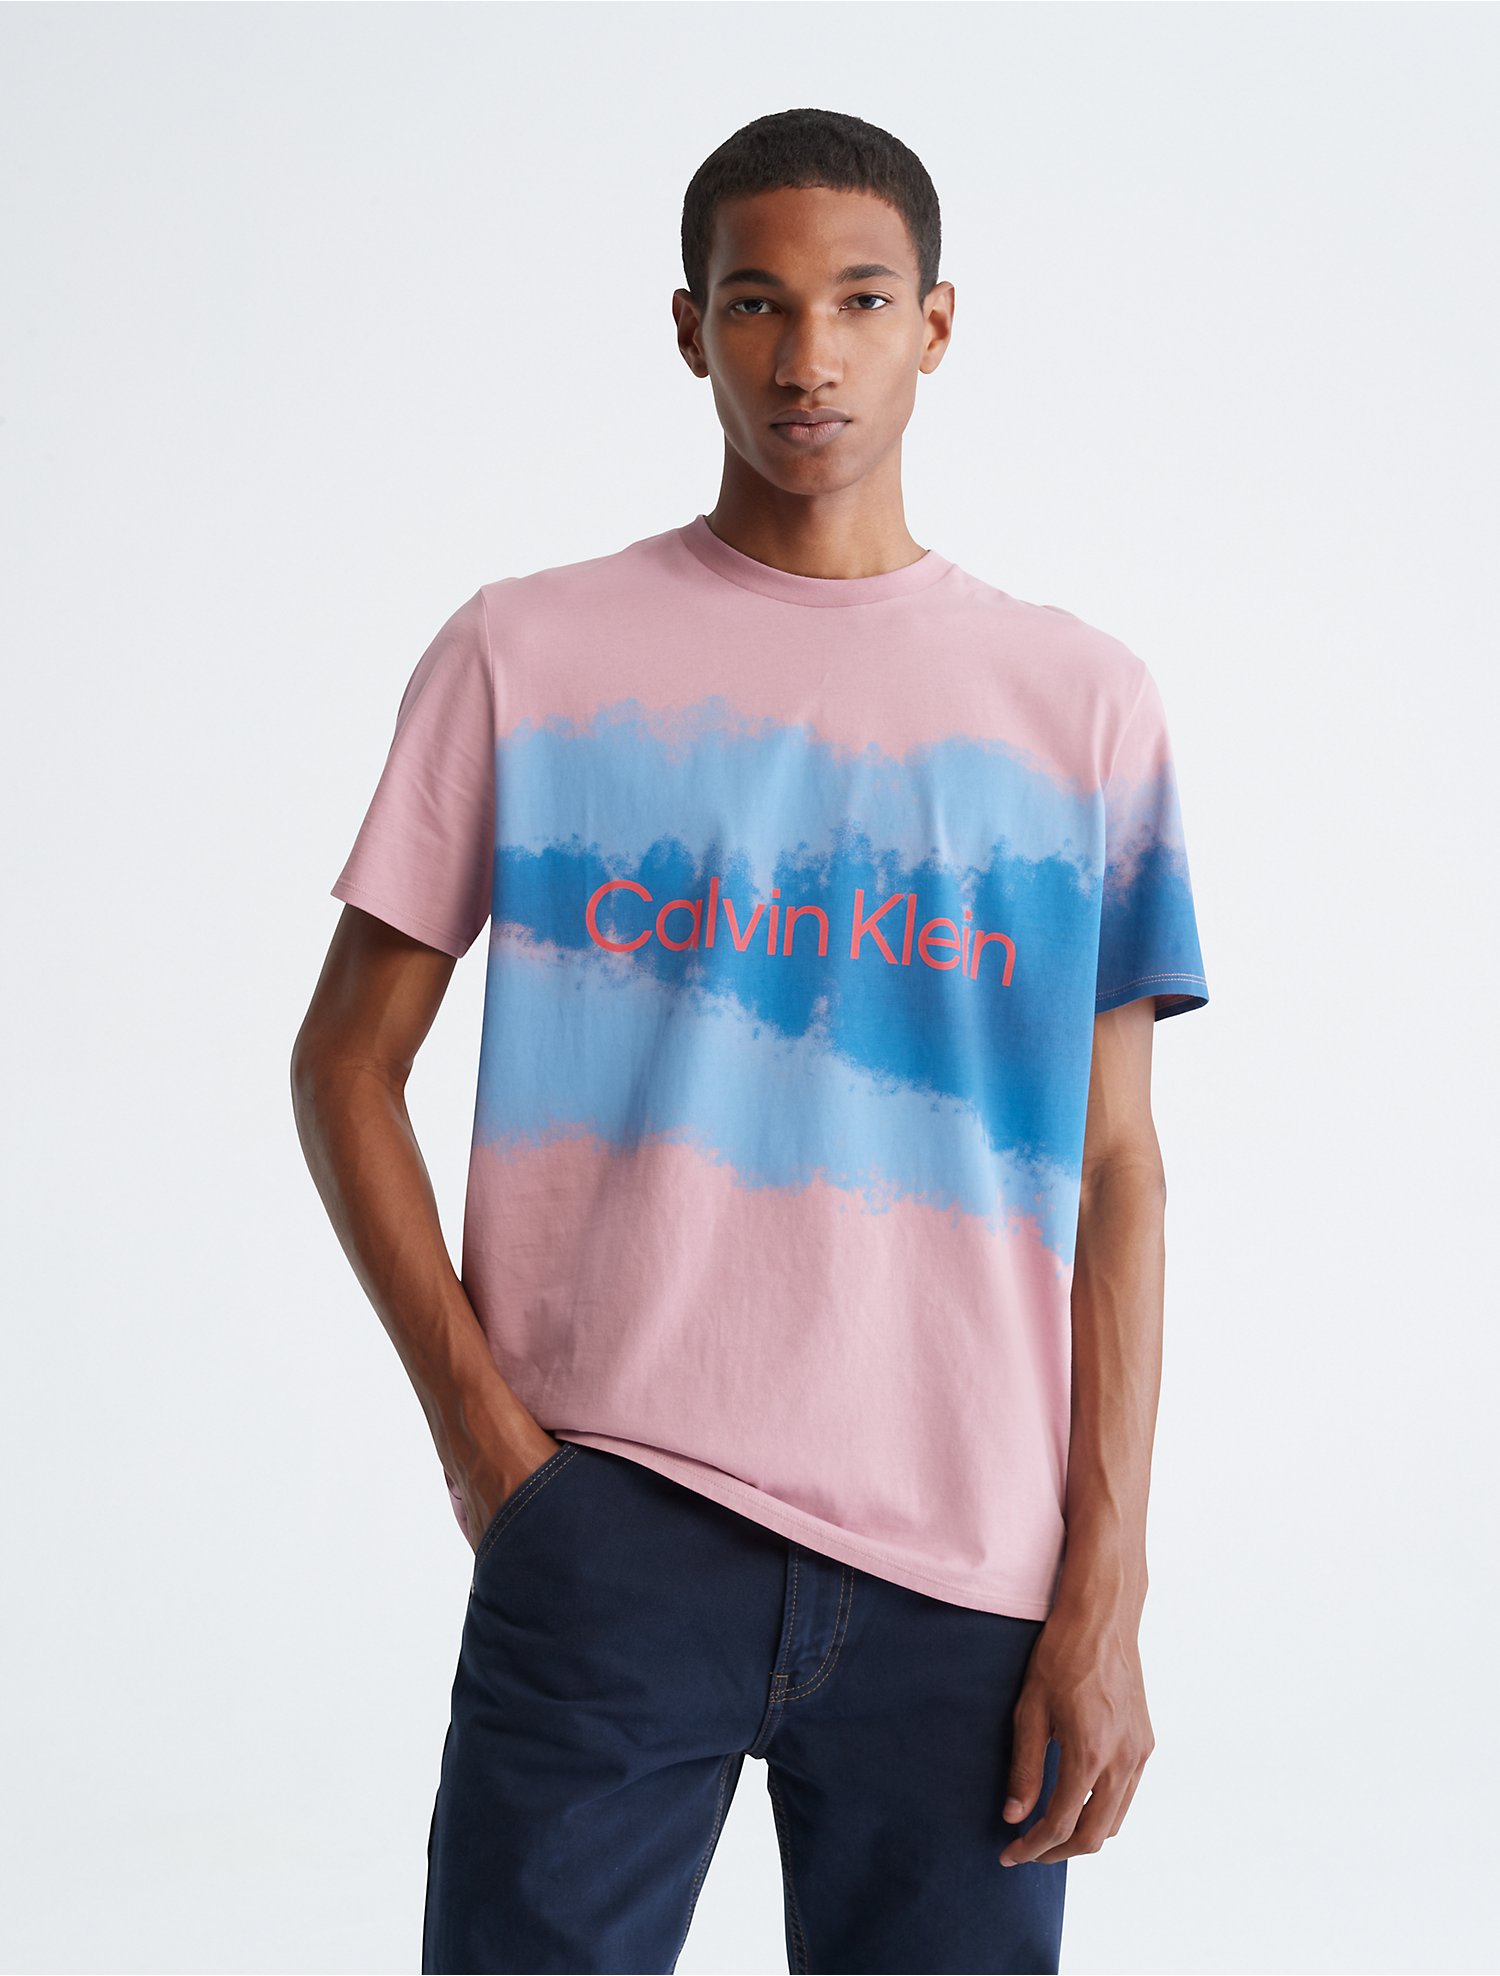 Styrke Inspiration Procent Galaxy Logo Crewneck T-Shirt | Calvin Klein